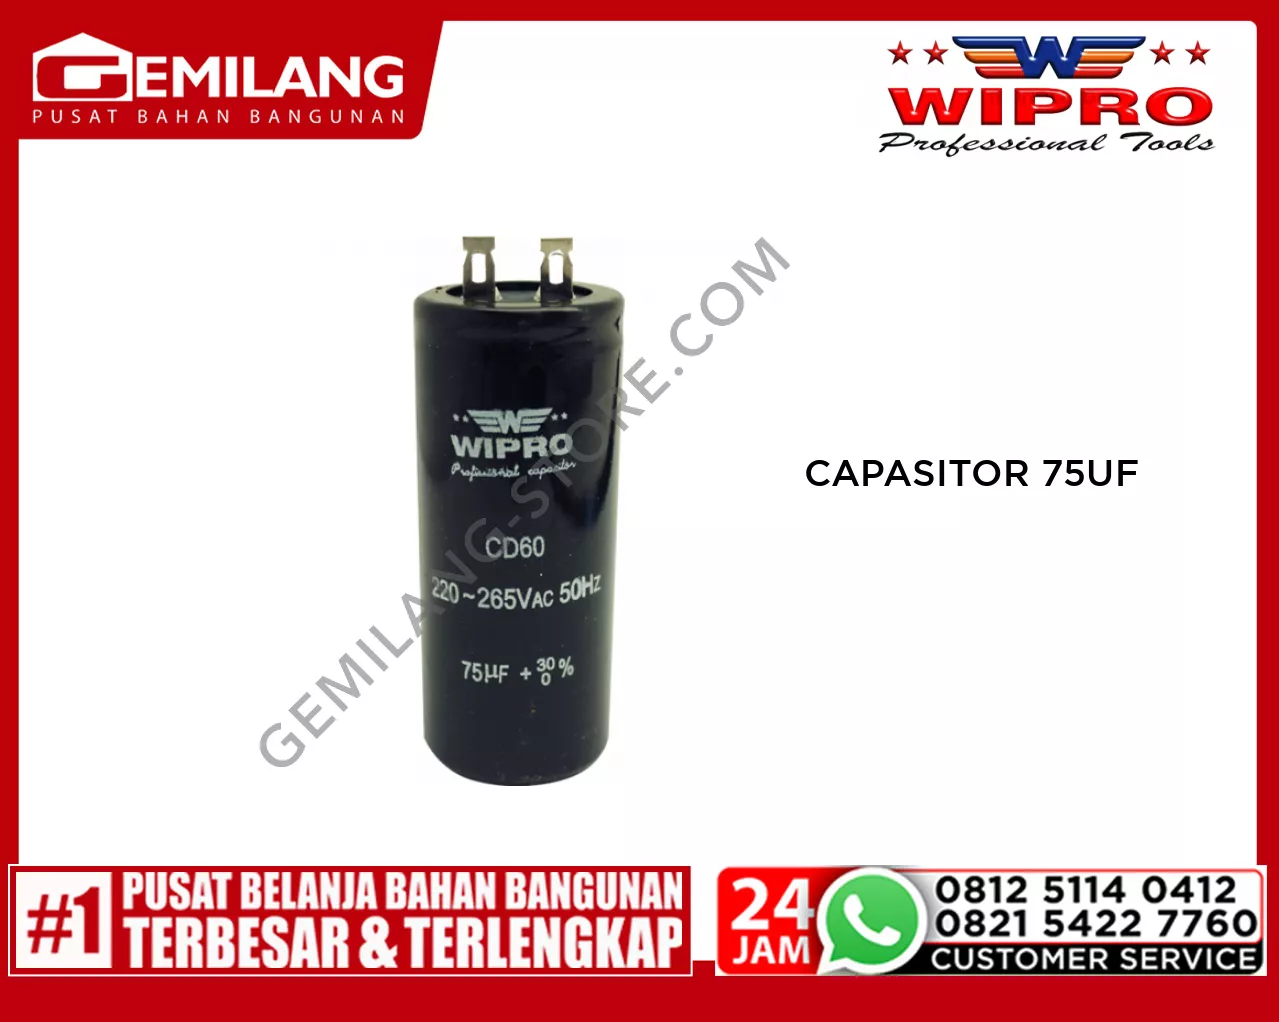 WIPRO CAPASITOR U/ELECTROMTR  75UF/220v-265VAC